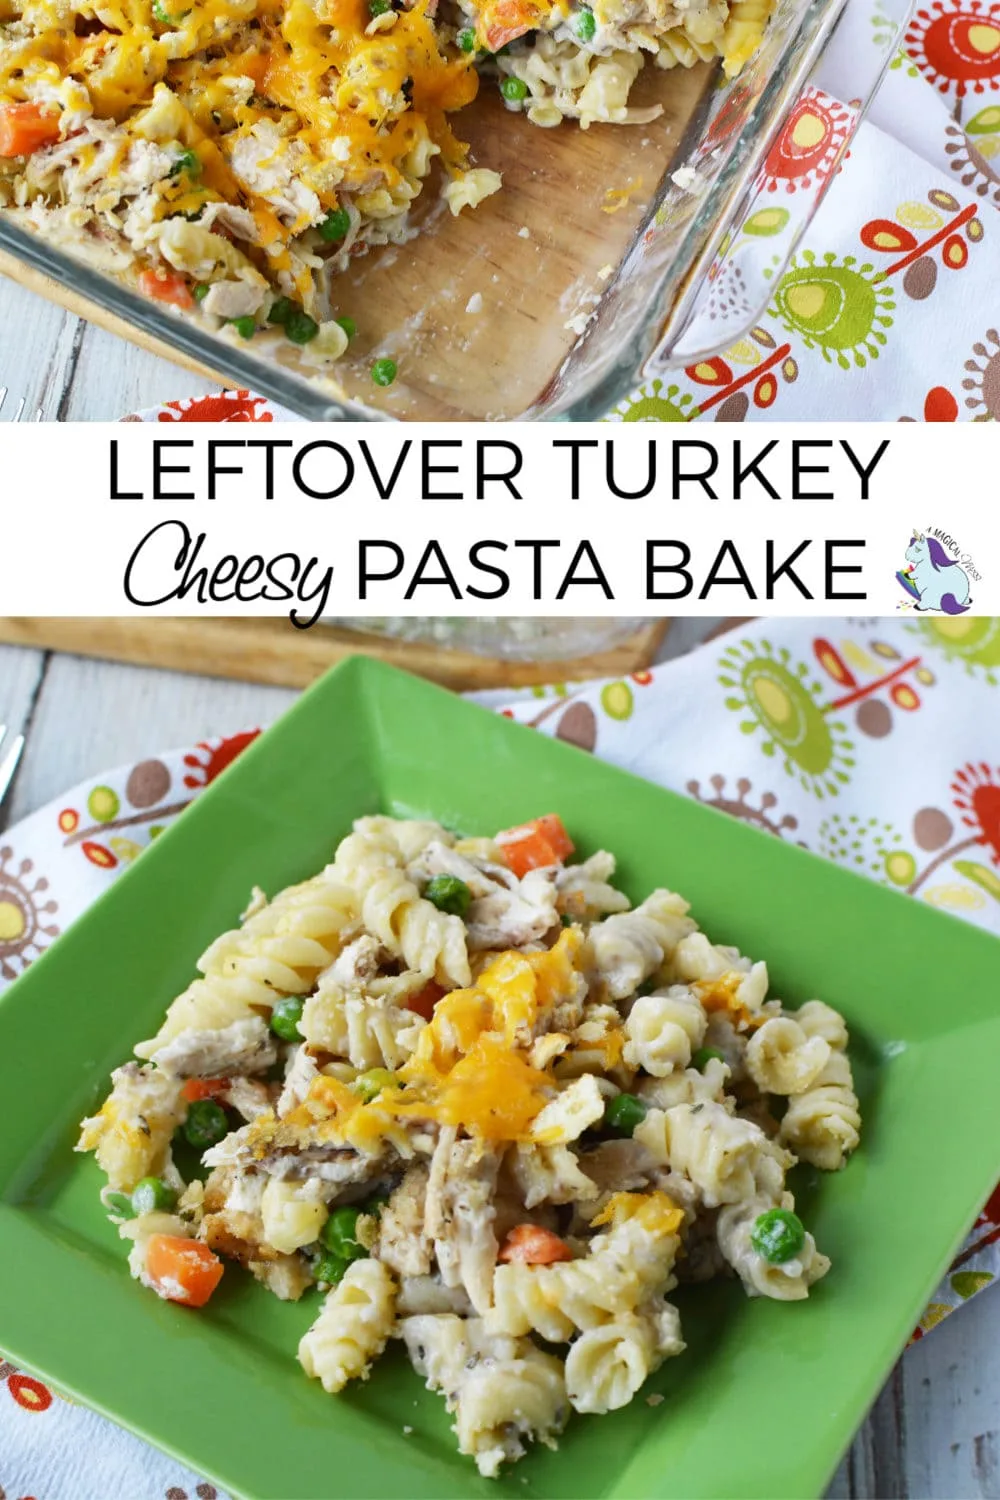 Leftover Turkey Recipe: Turkey Pasta Bake Recipe with Veggies and Cheese